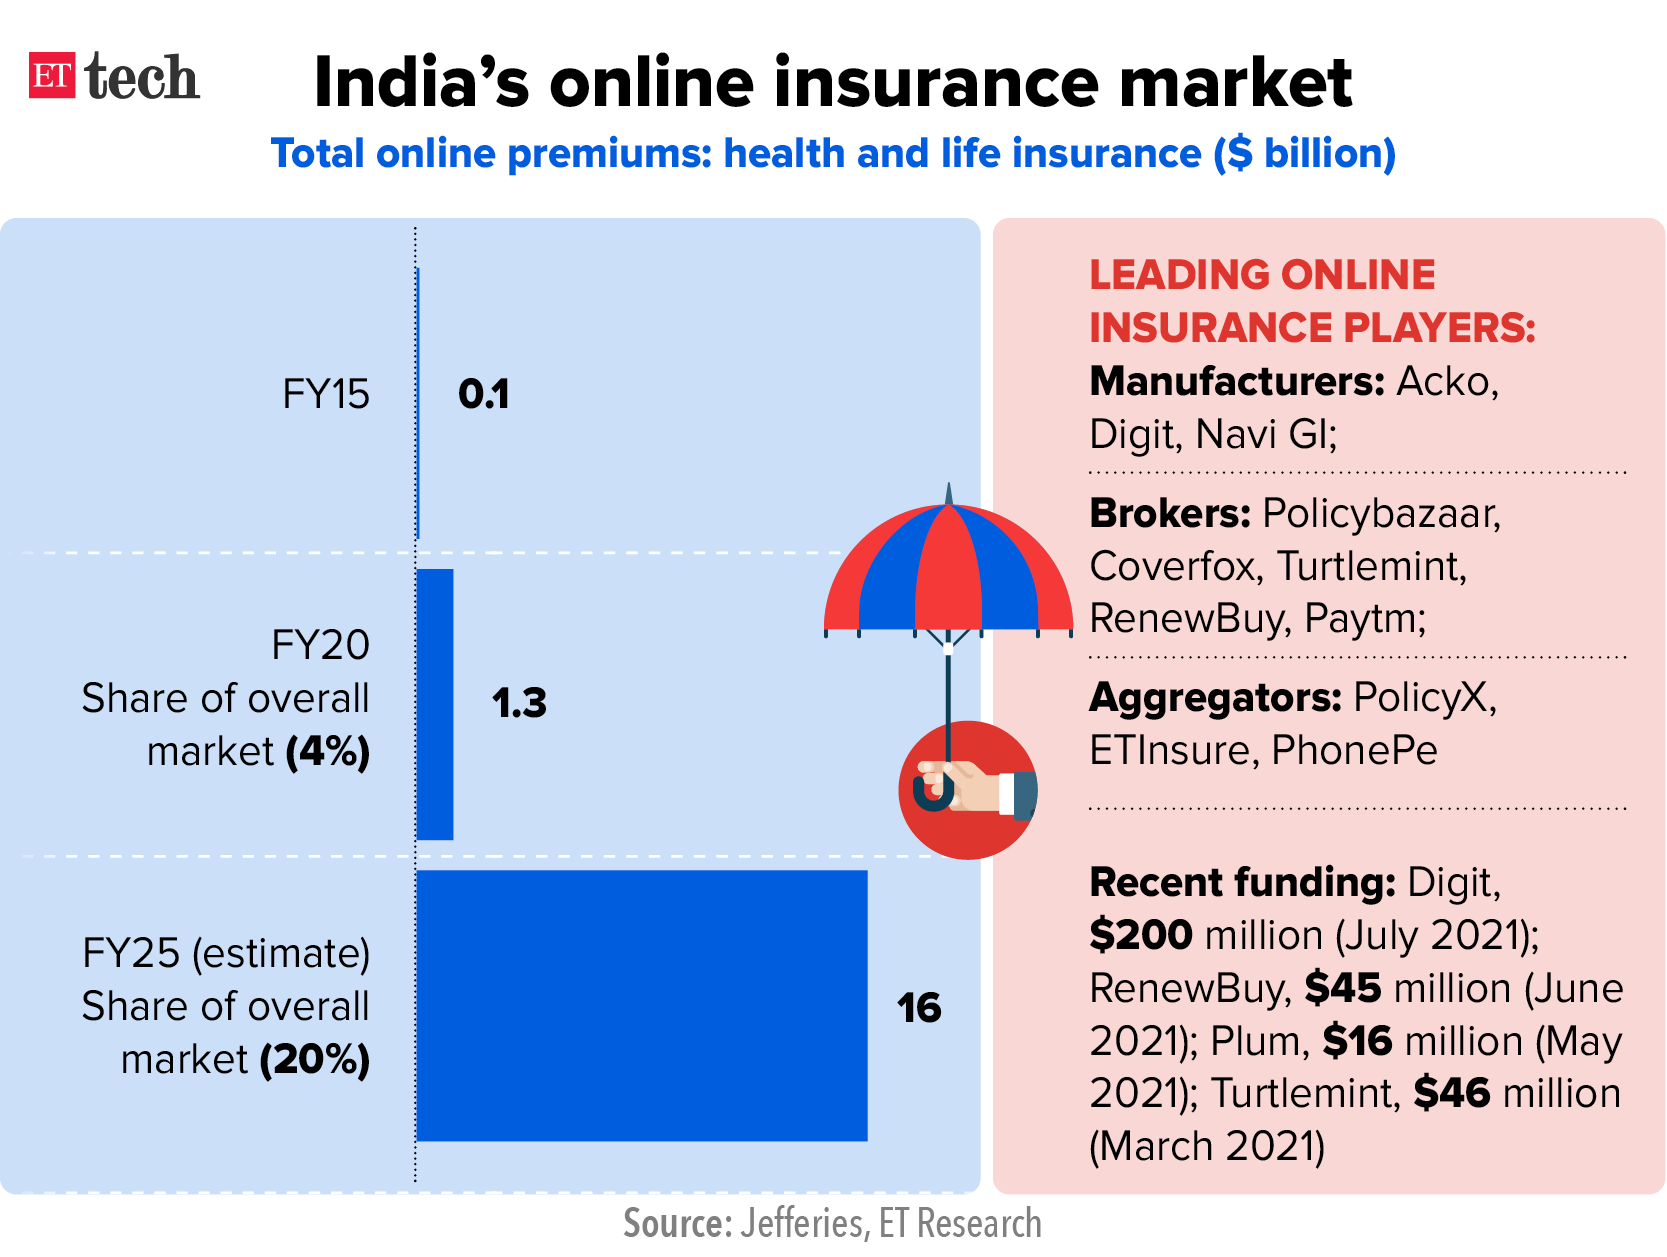 Online Insurance